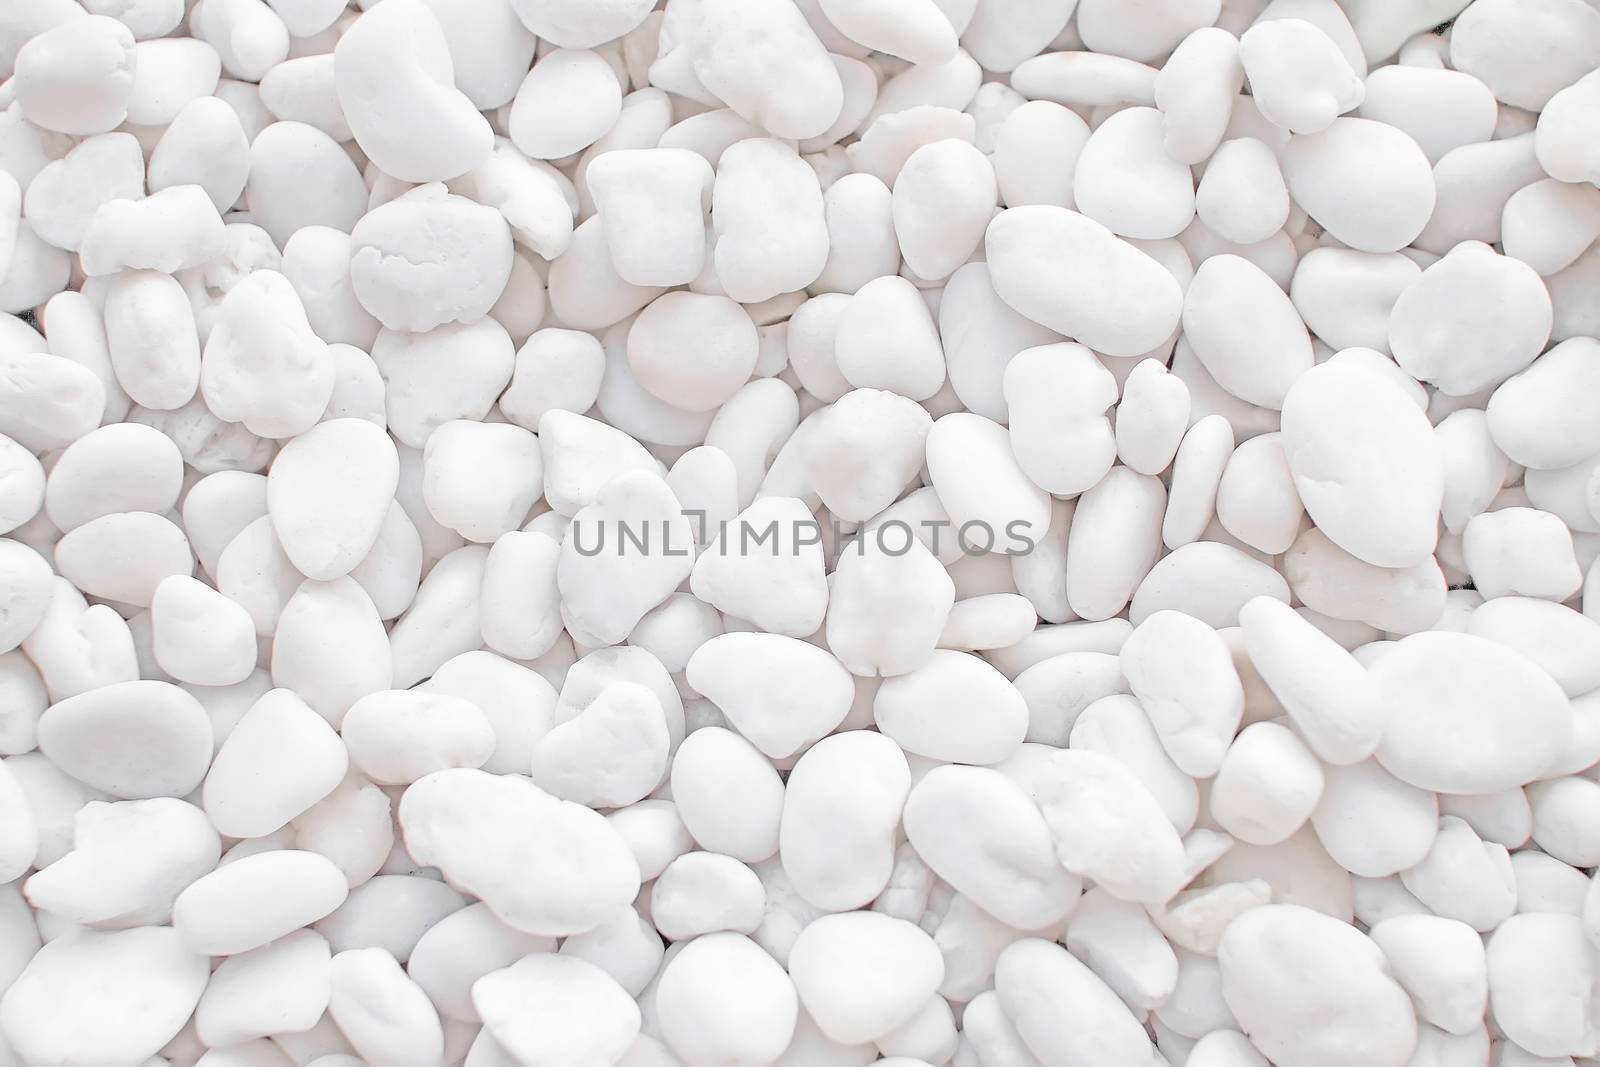 Small naturally white rock pebbles.